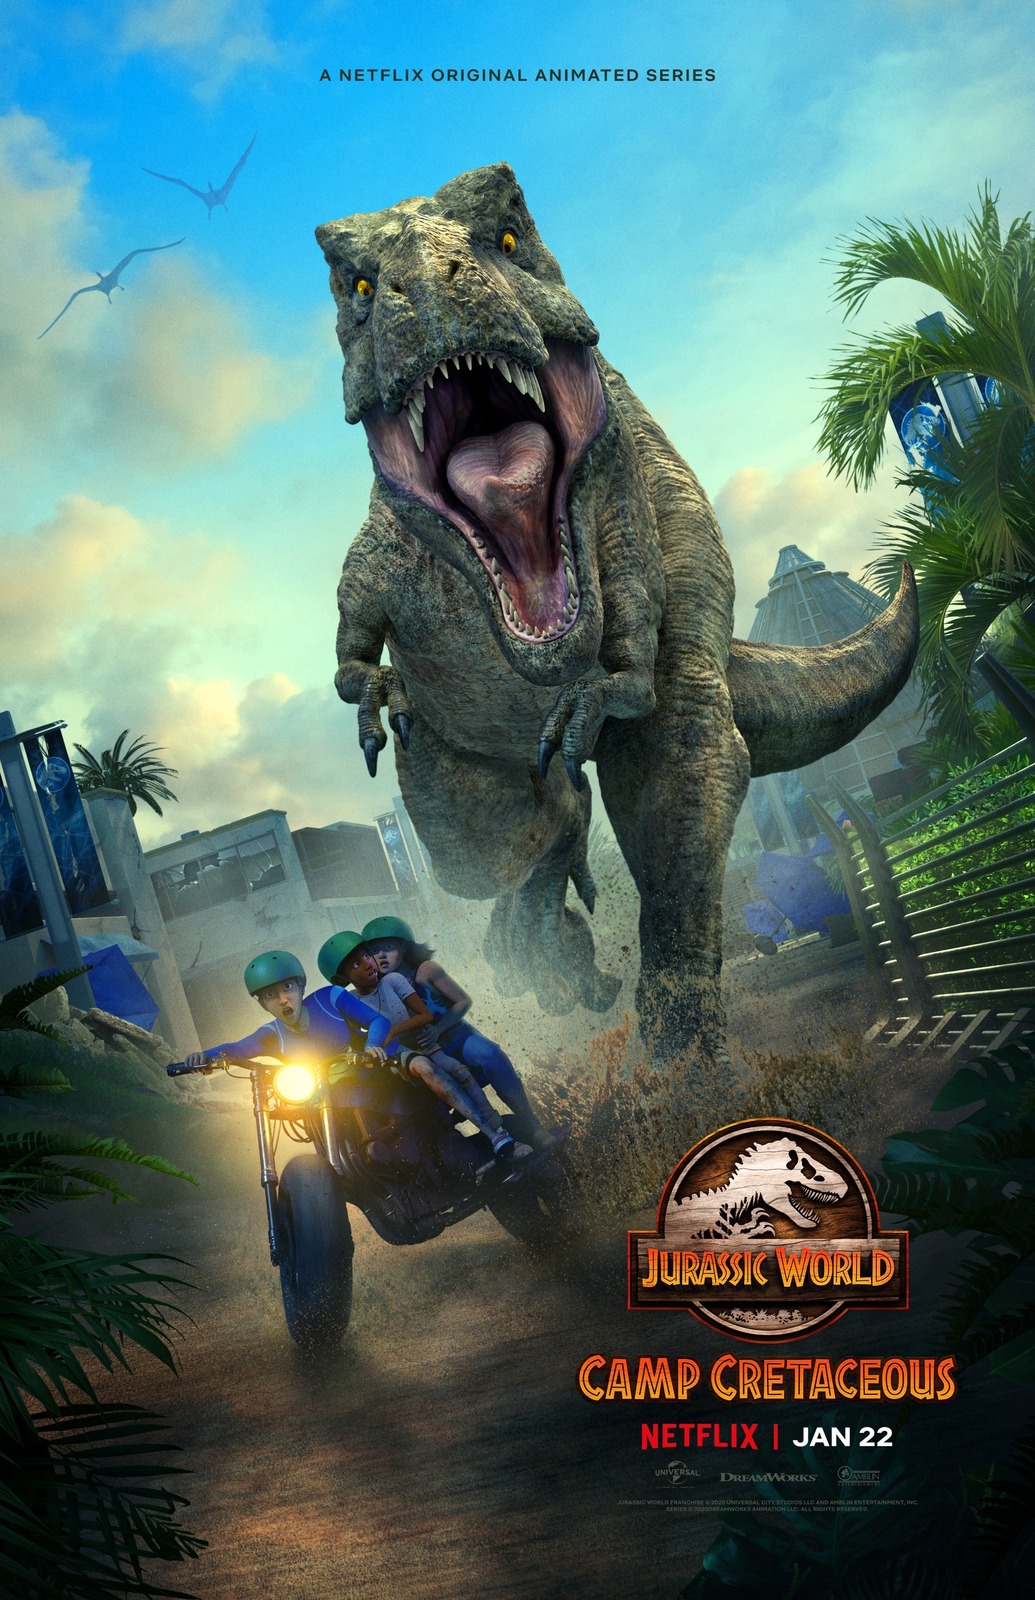 Jurassic World Camp Cretaceous Poster Netflix Animated TV Series Art Print 24x36